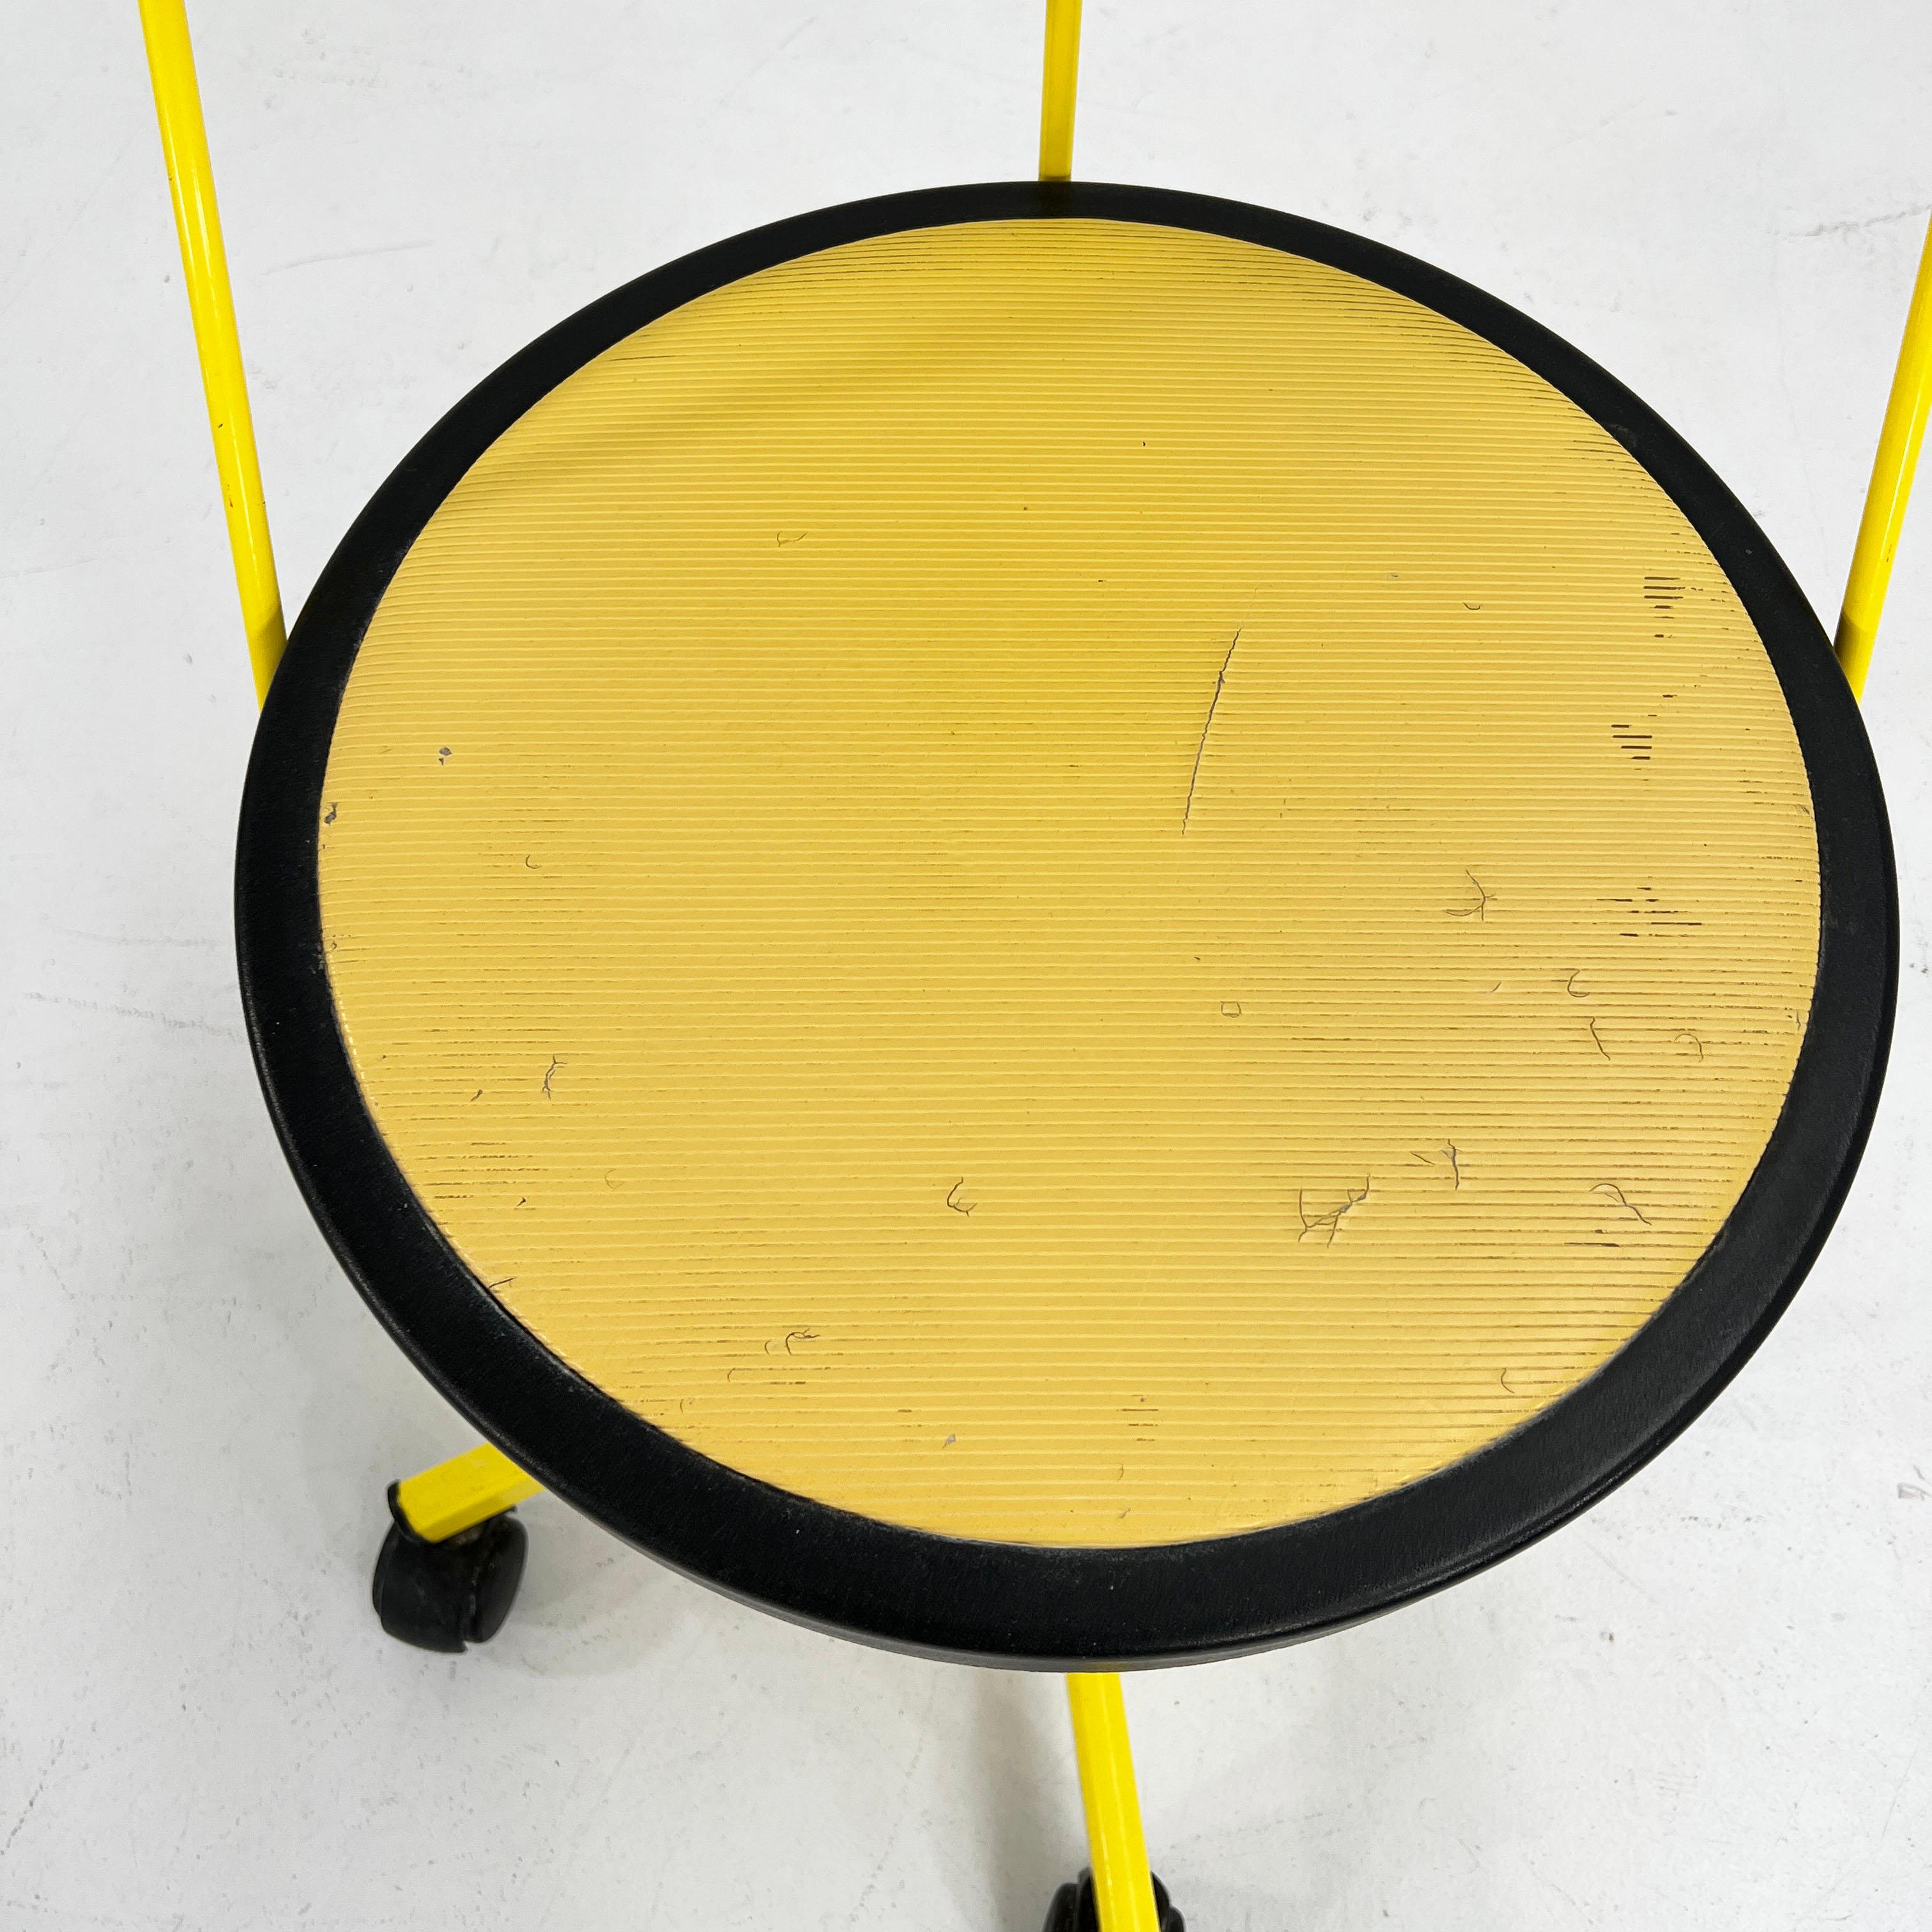 Metal Adjustable Yellow Desk Chair from Bieffeplast, 1980s